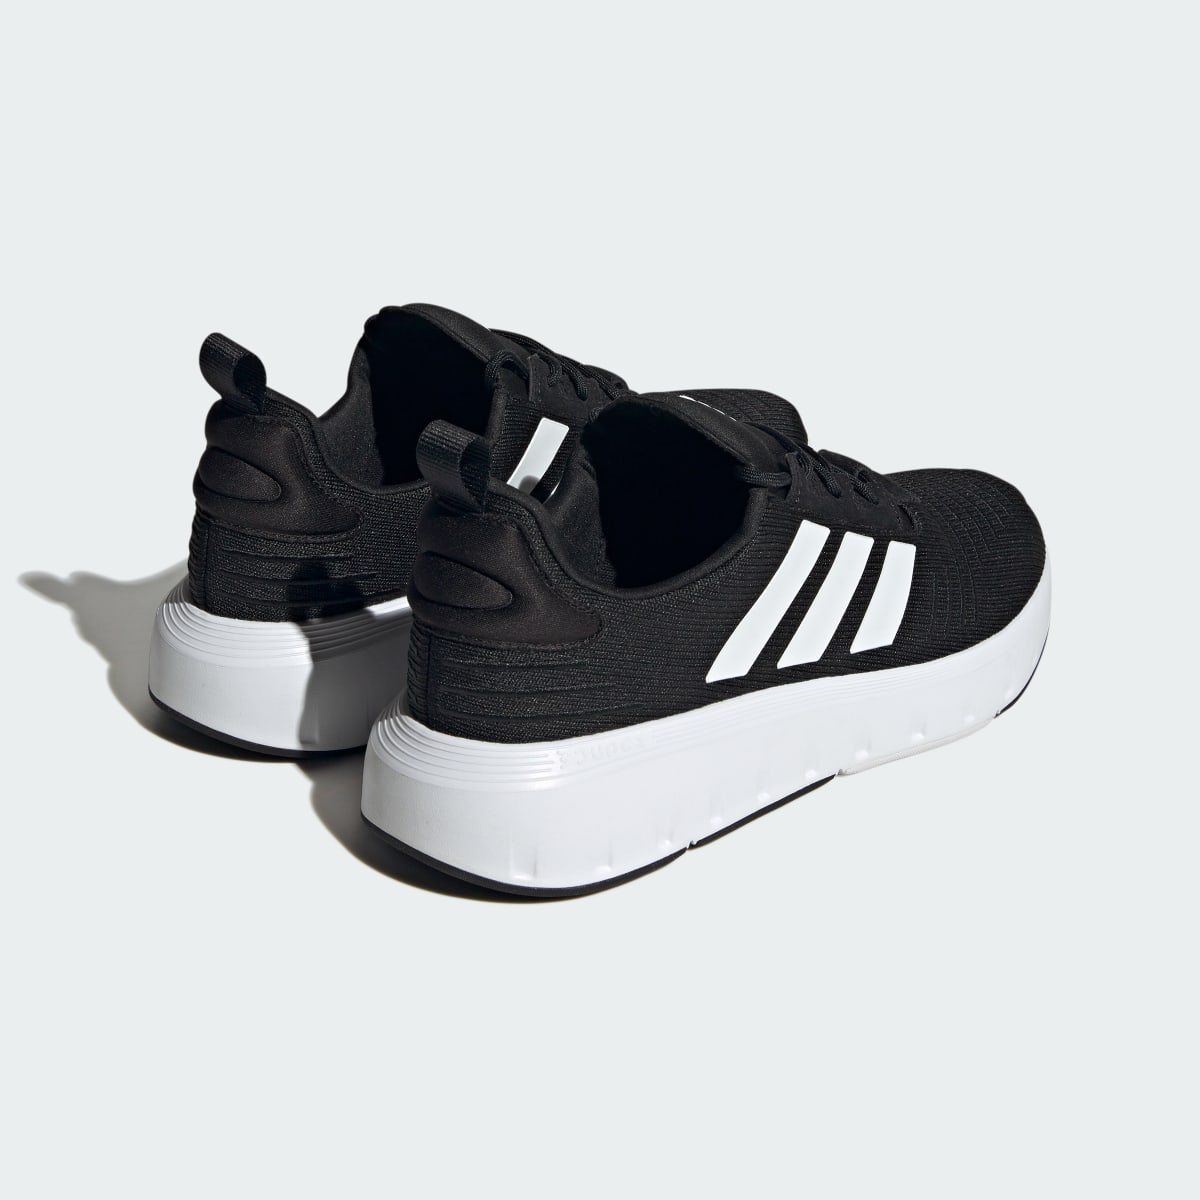 Adidas Swift Run Ayakkabı. 6